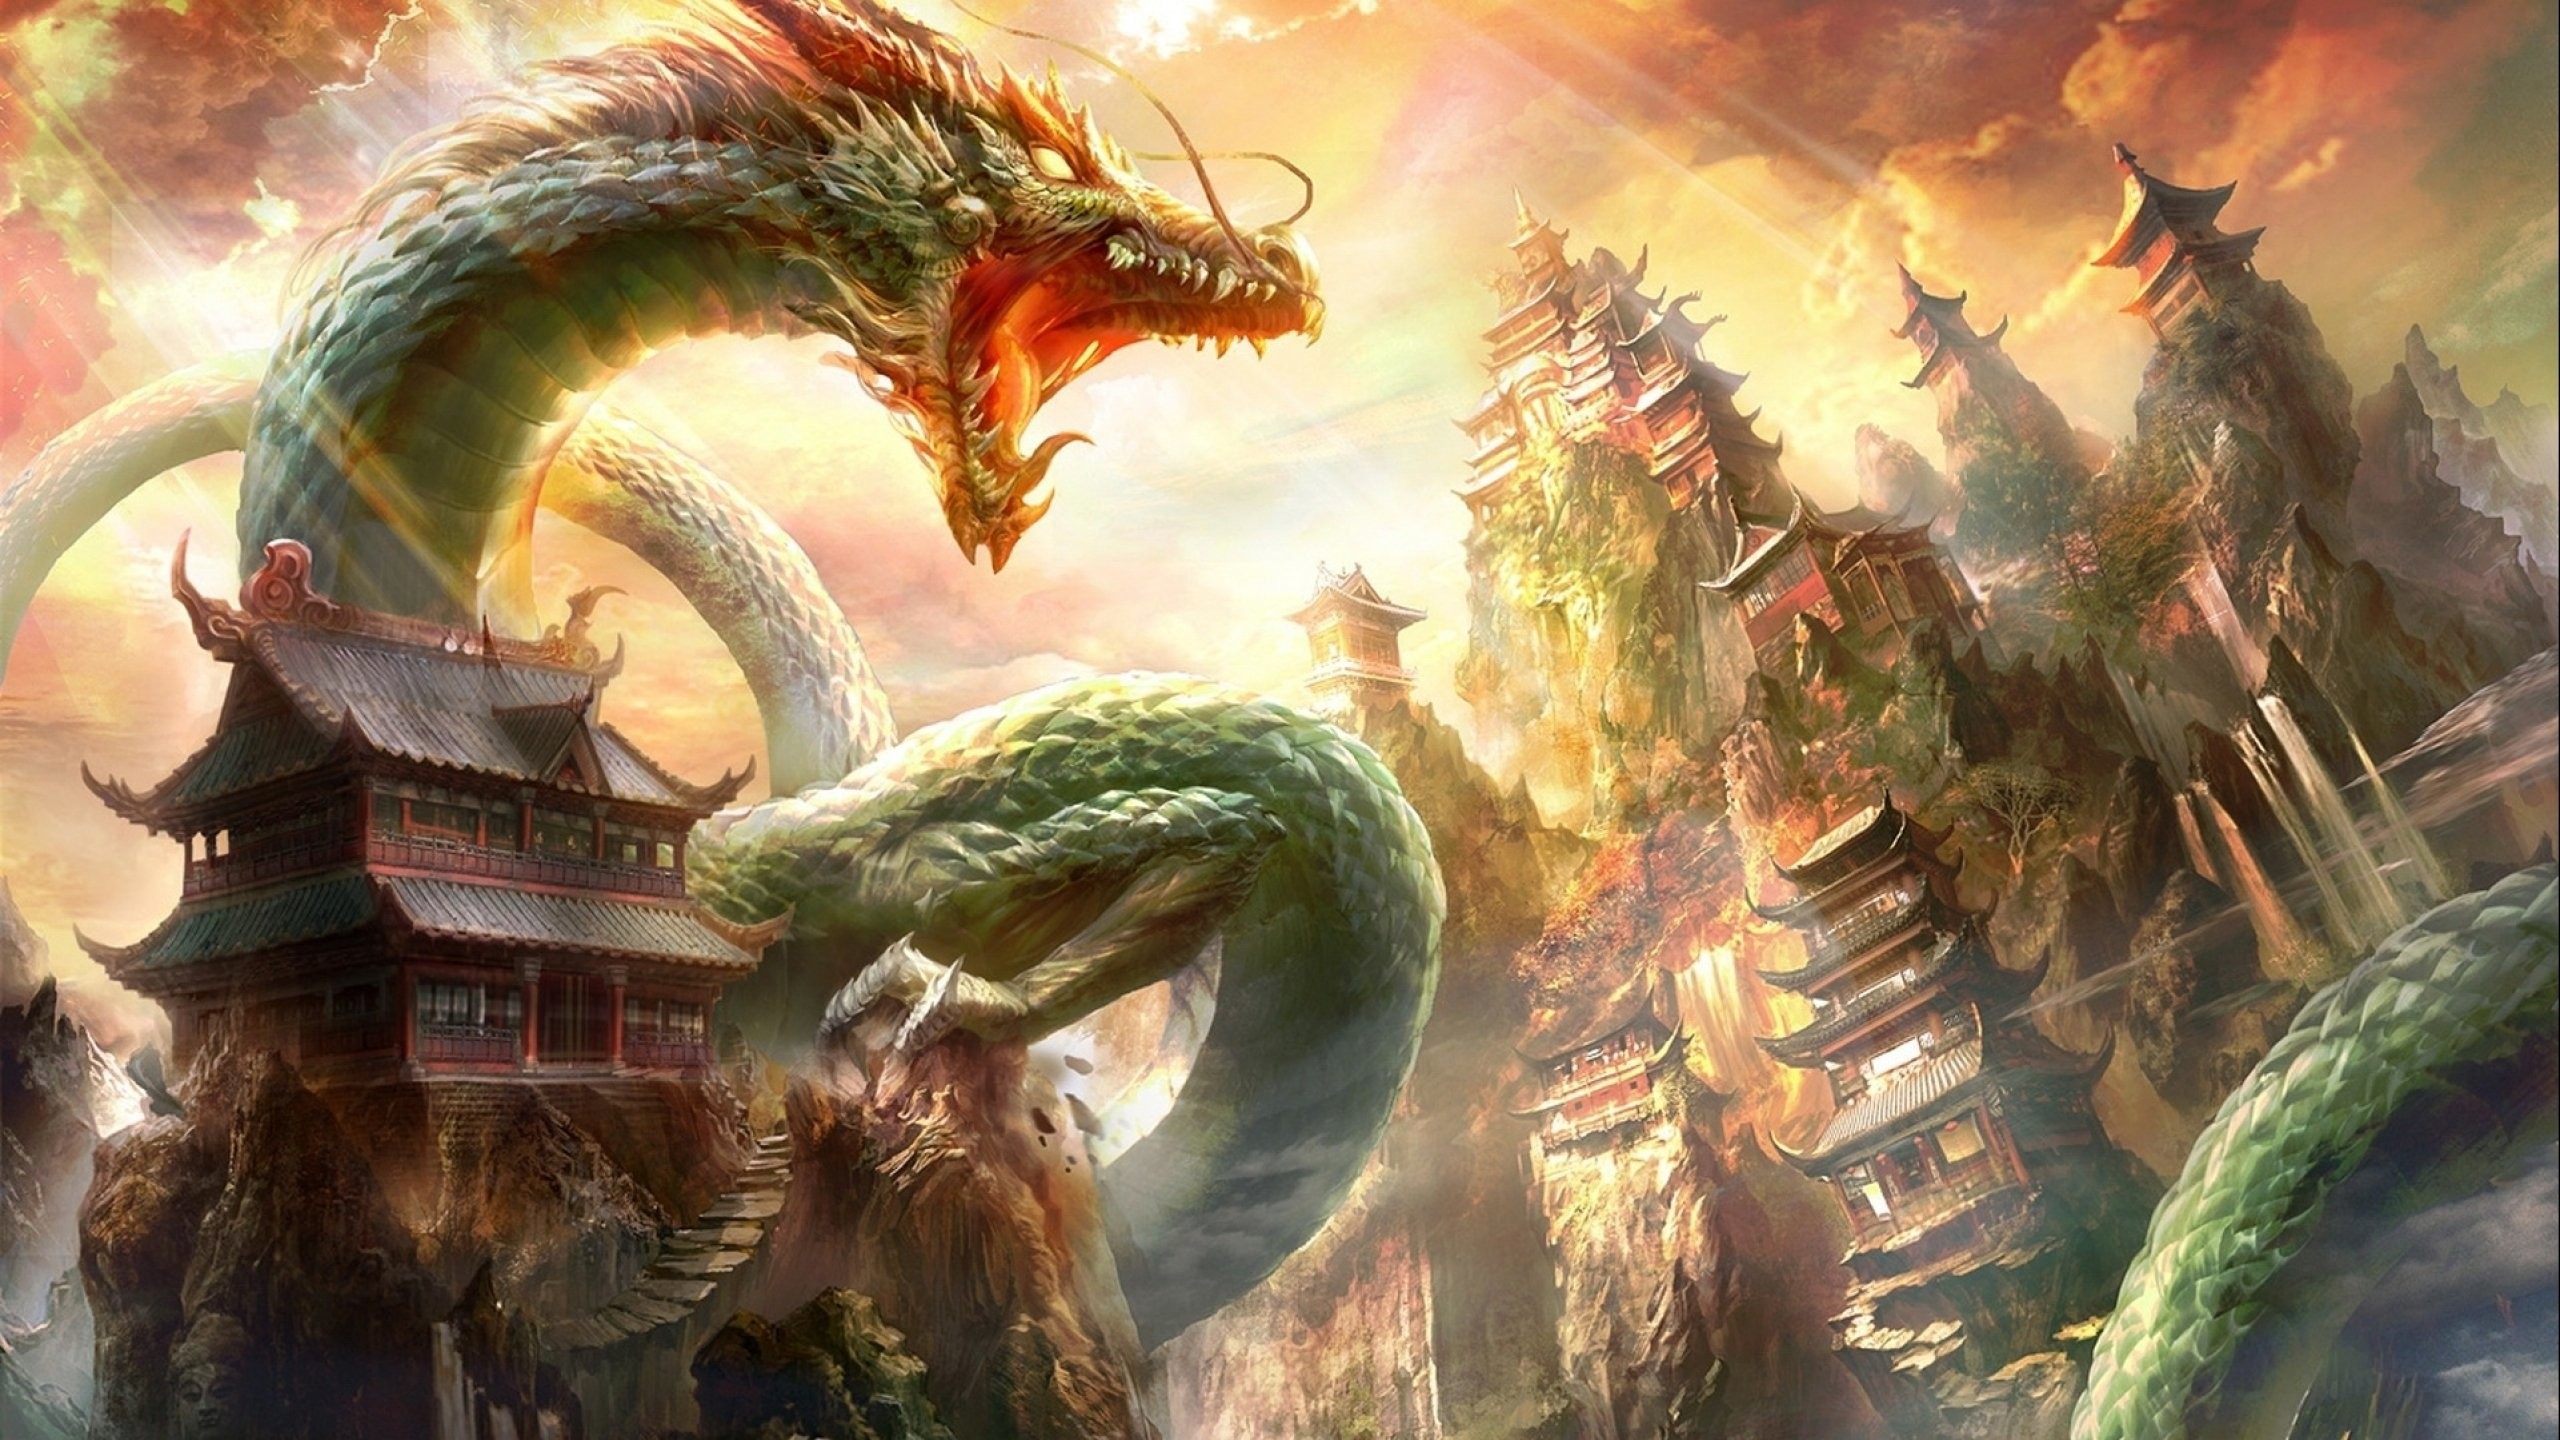 Dragon Fantasy Artwork Wallpapers